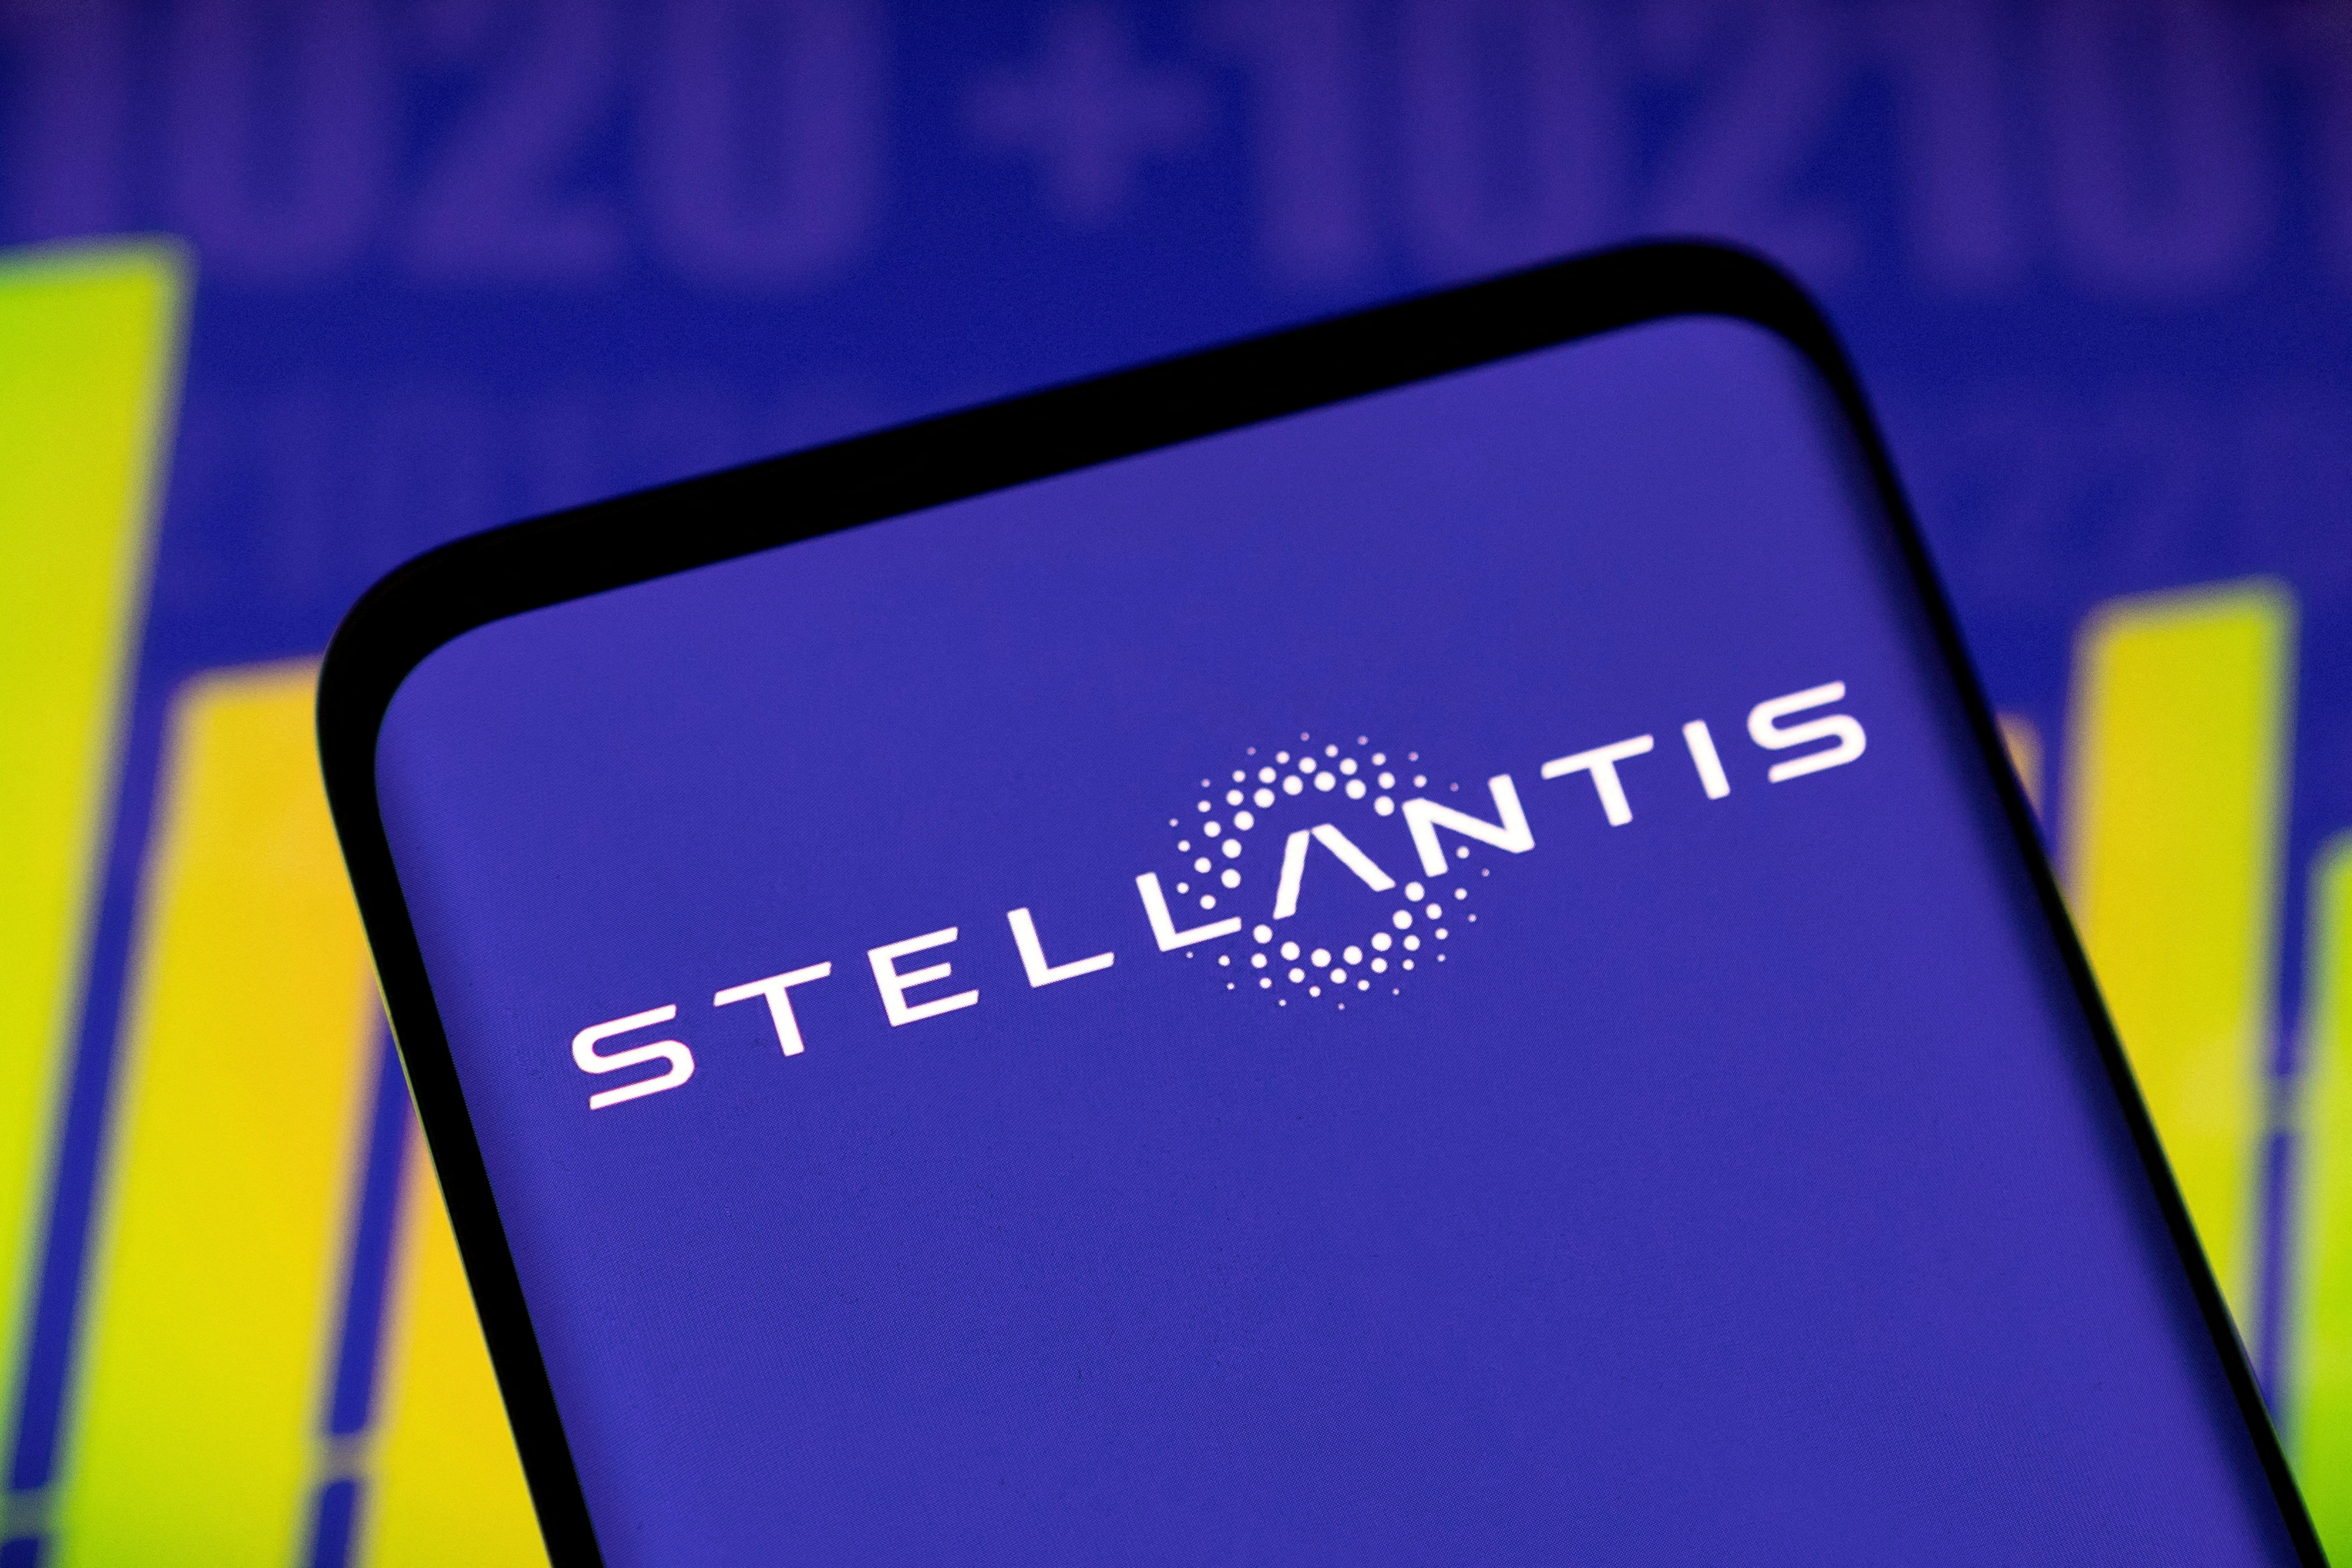 Illustration shows Stellantis logo